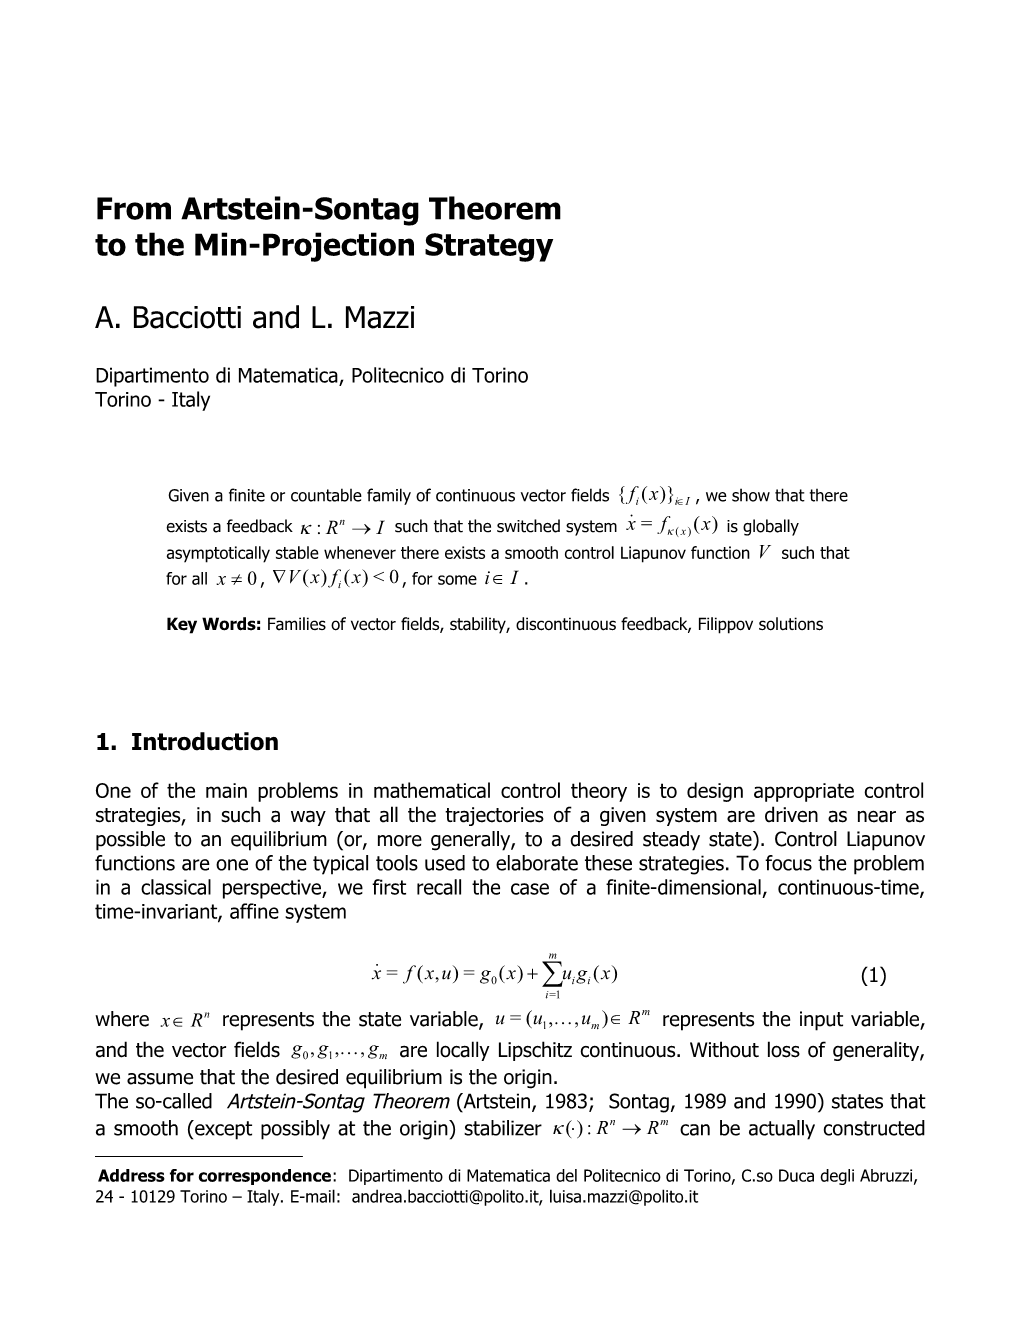 From Artstein-Sontag Theorem